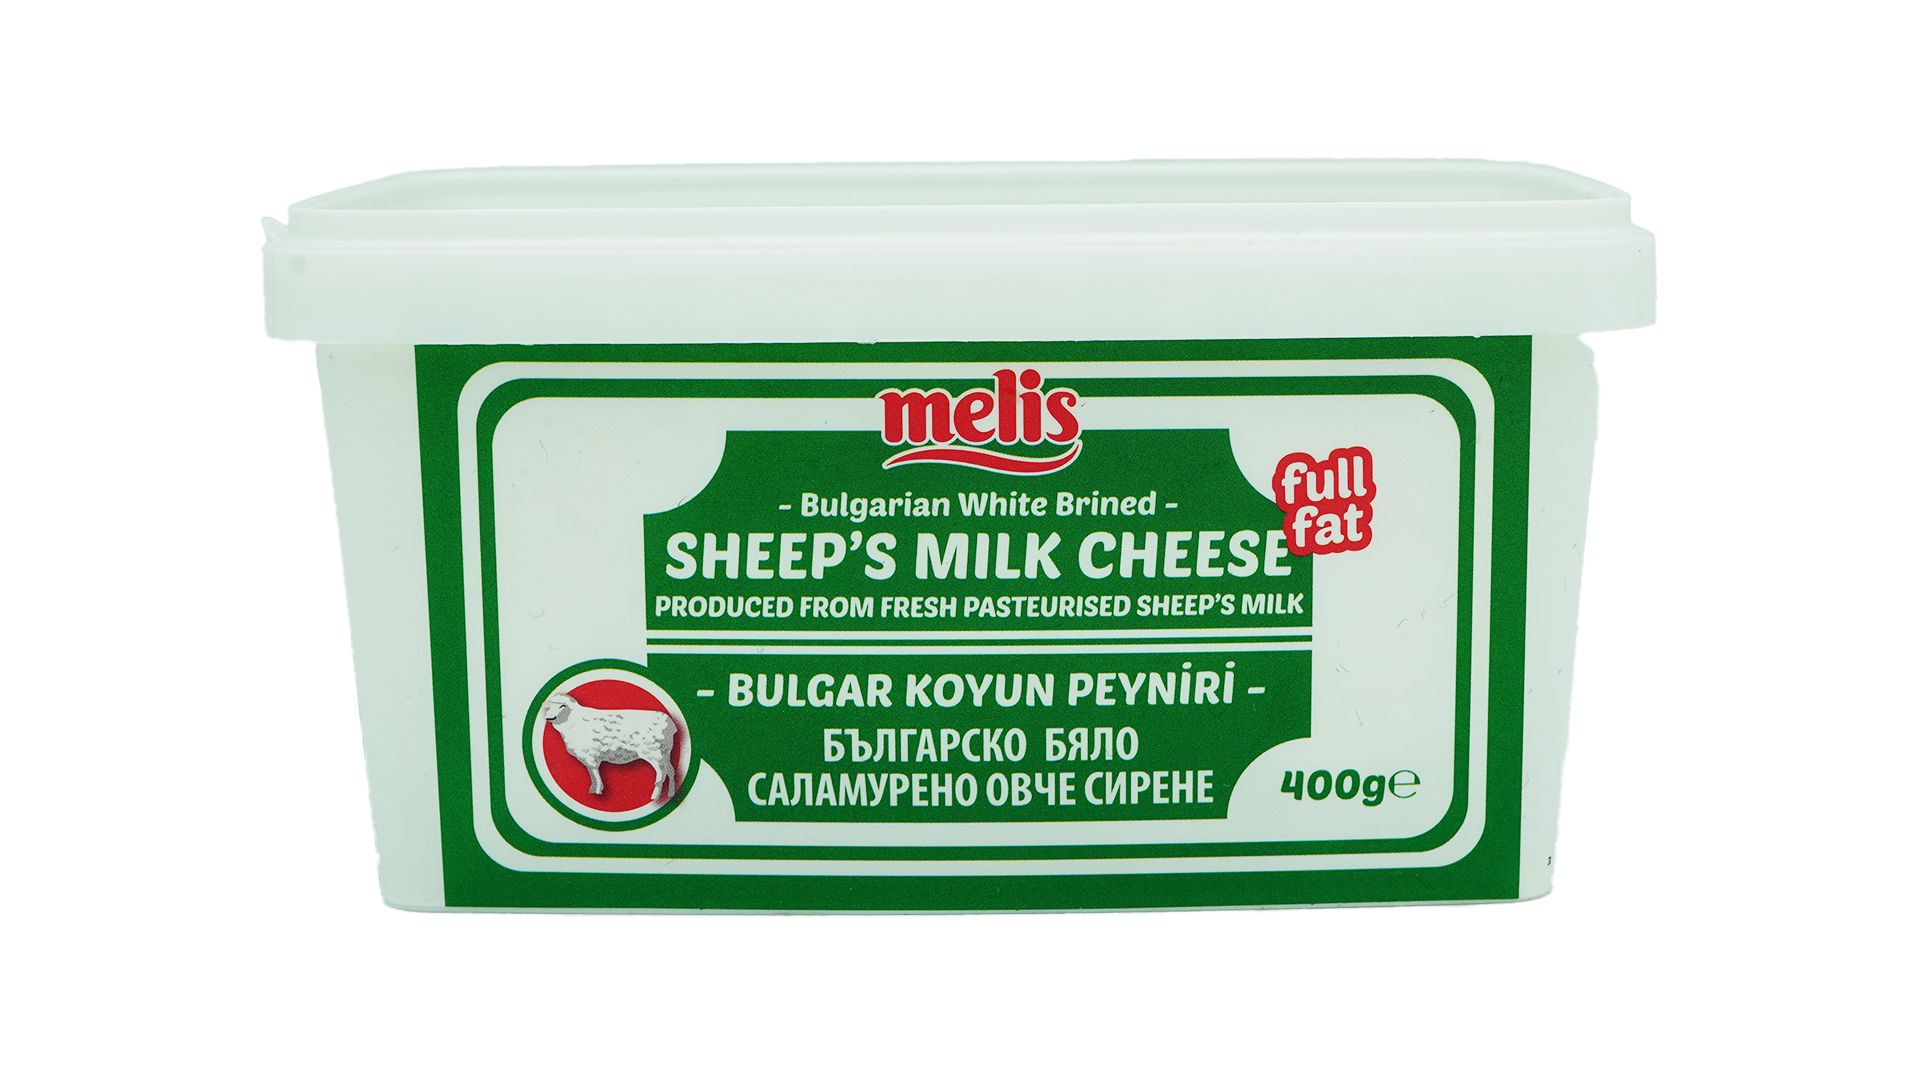 Melis sheepss milk cheese 400g 2